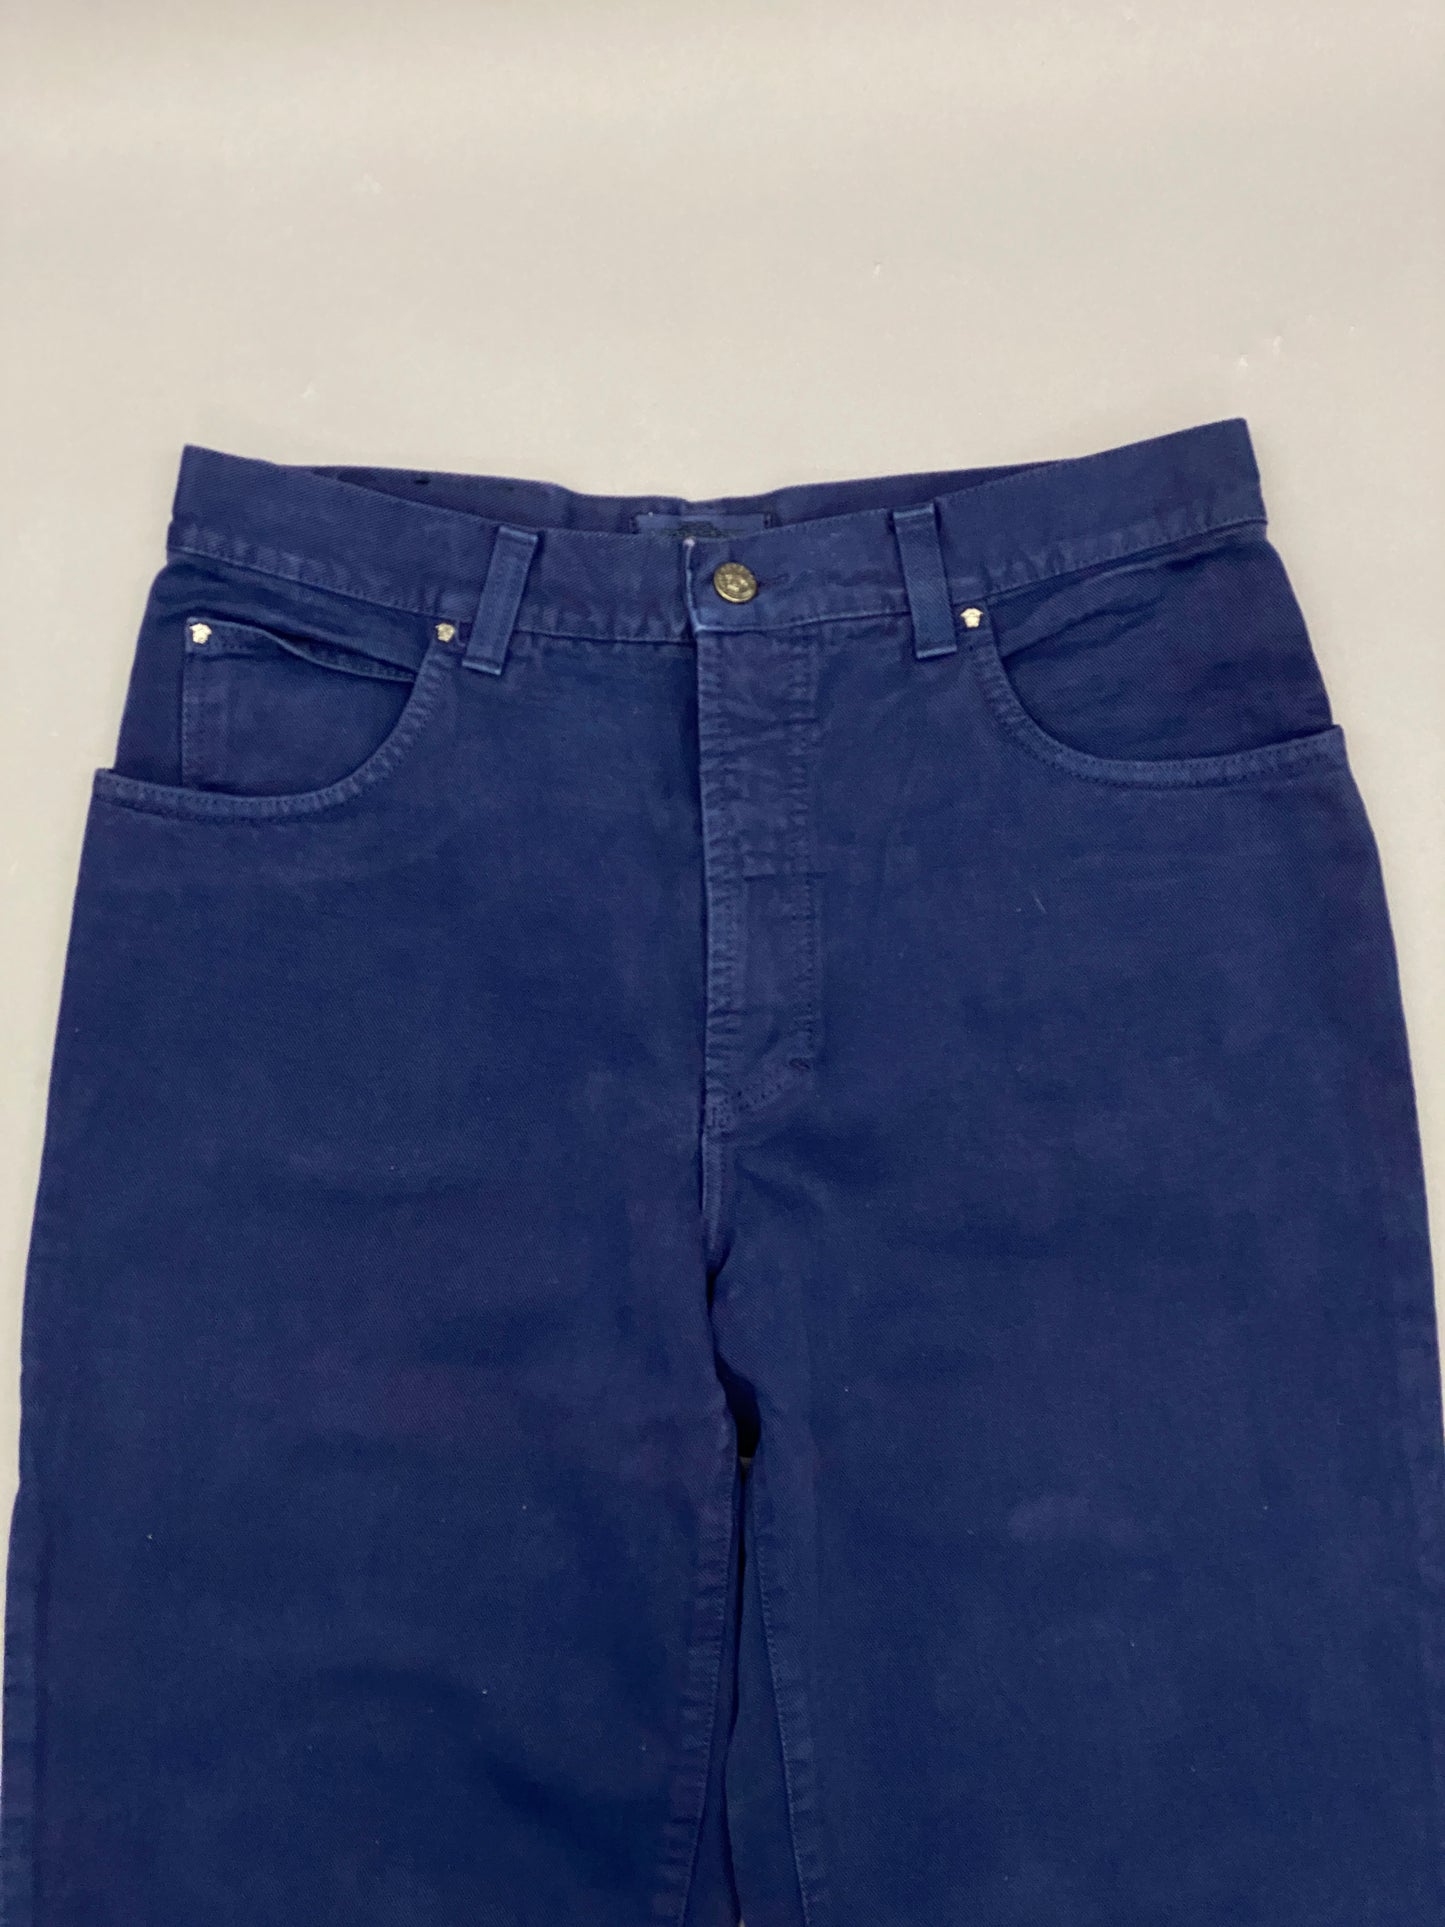 Versace Navy Vintage Jeans - 32